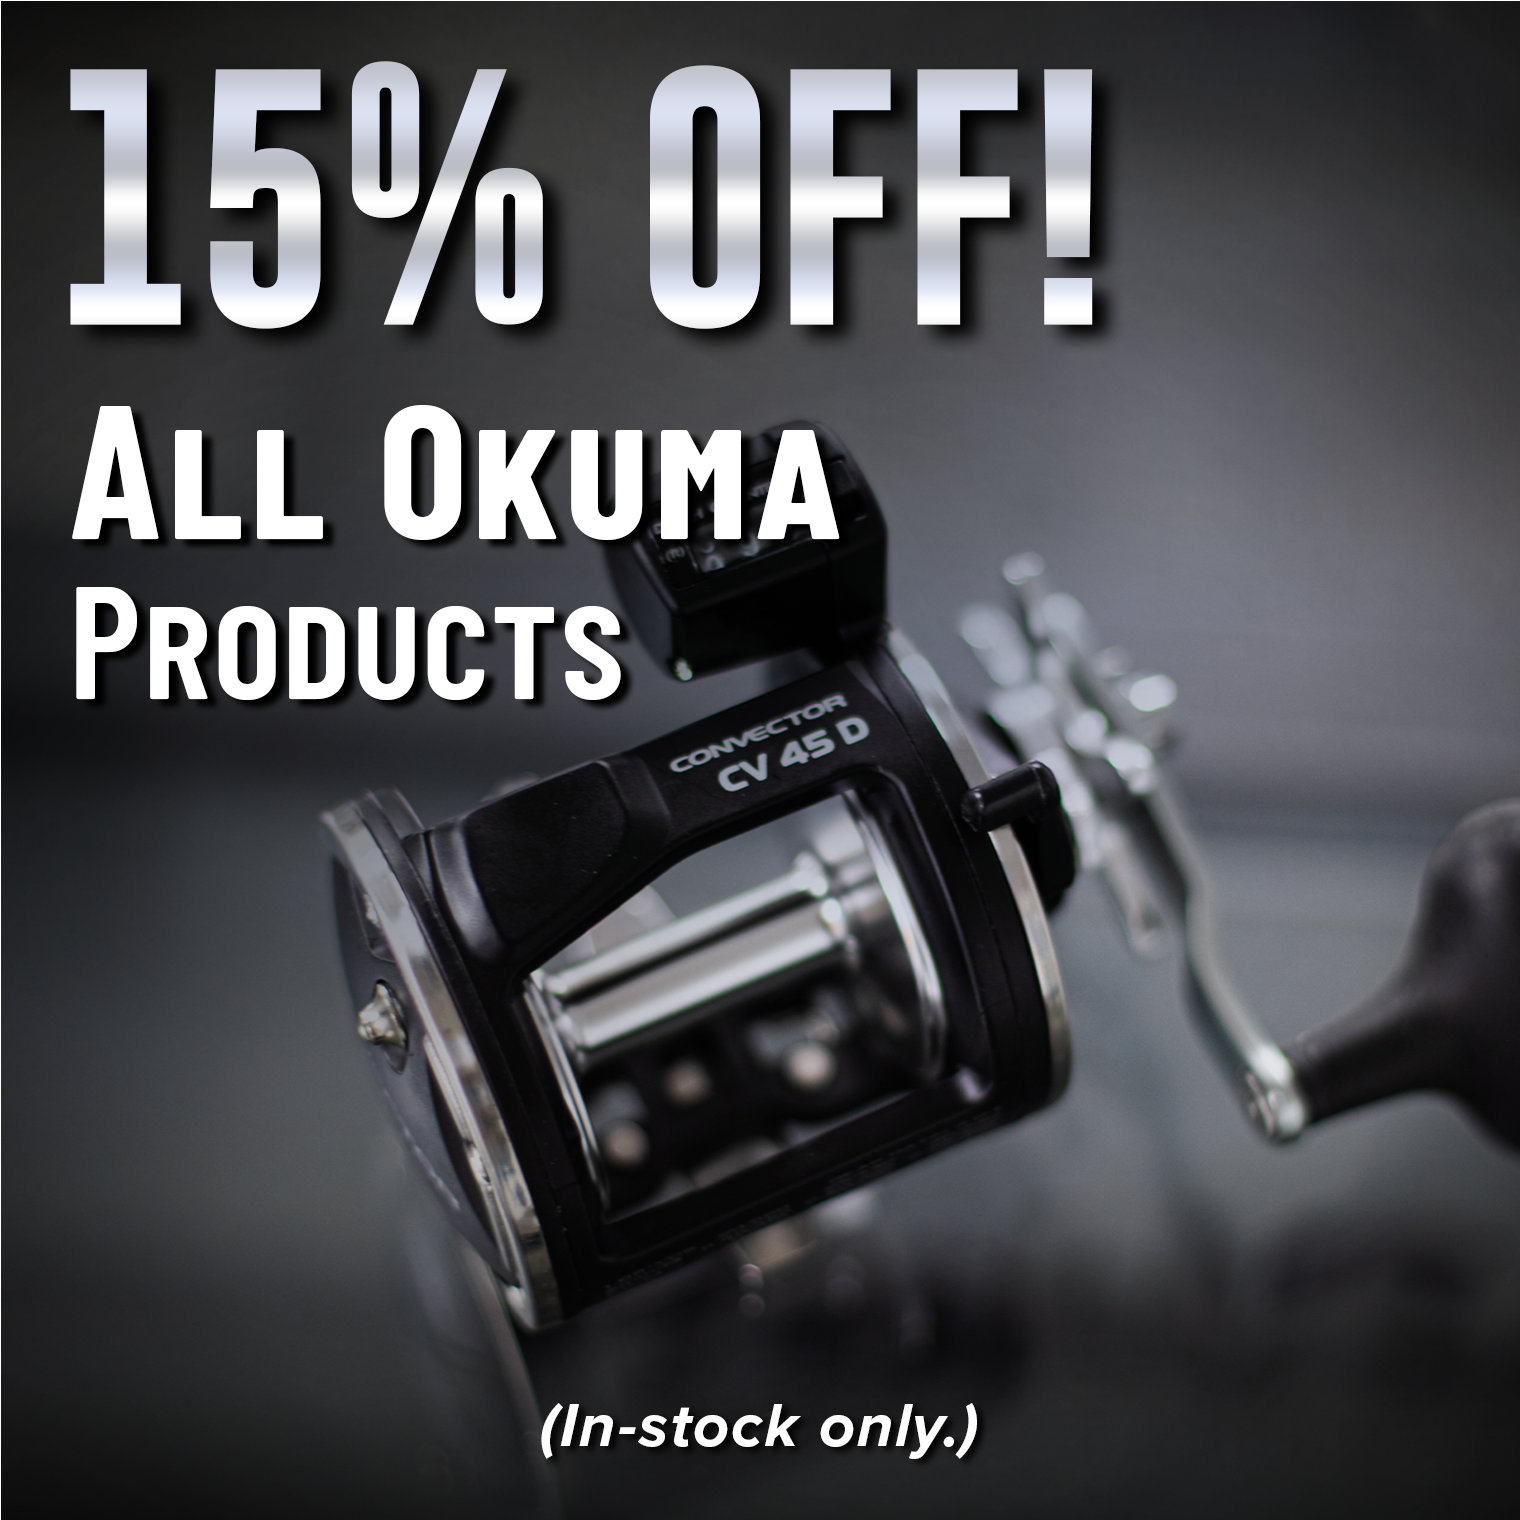 15% Off! All Okuma Products